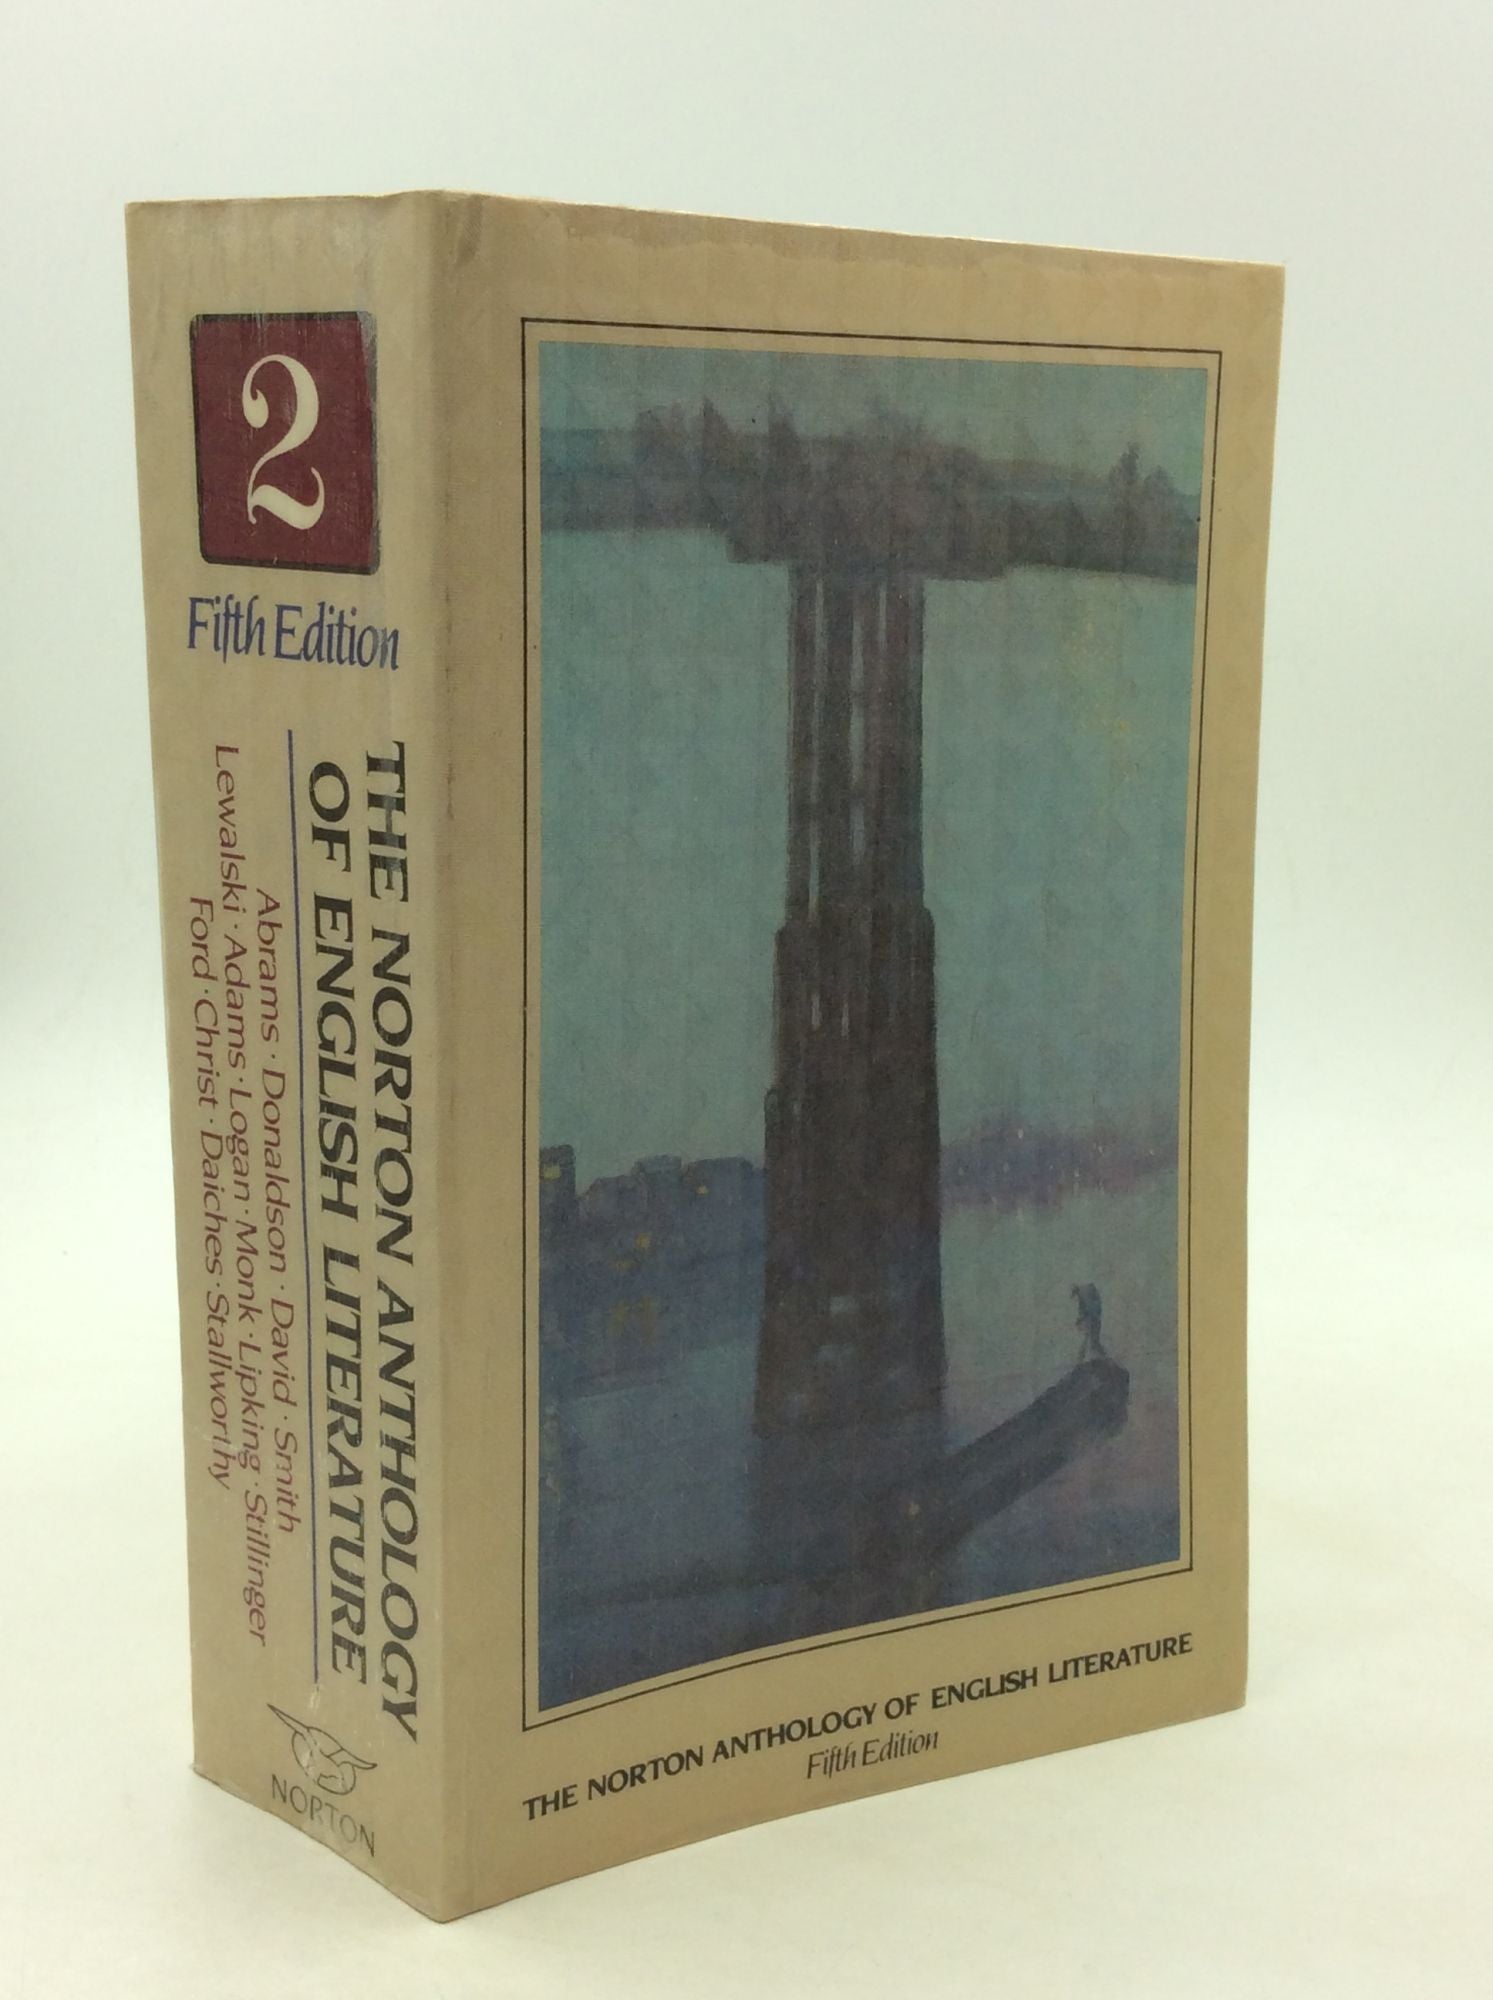 M.H. Abrams, ed - The Norton Anthology of British Literature: Fifth Edition, Volume 2